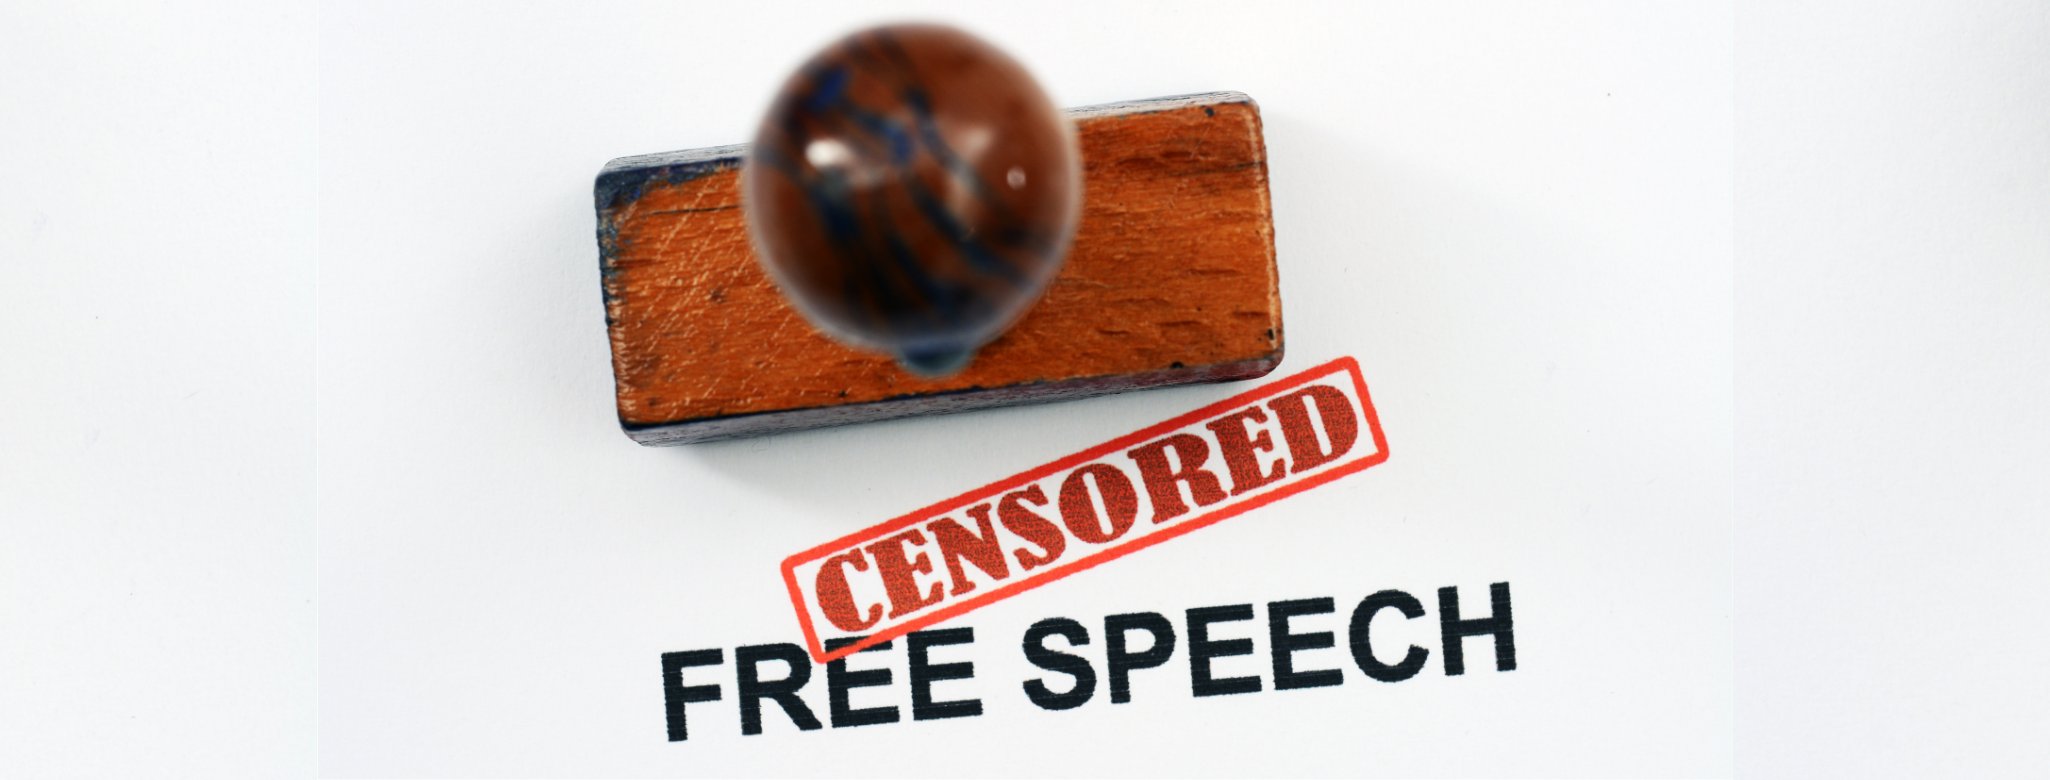 Free Speech Censored